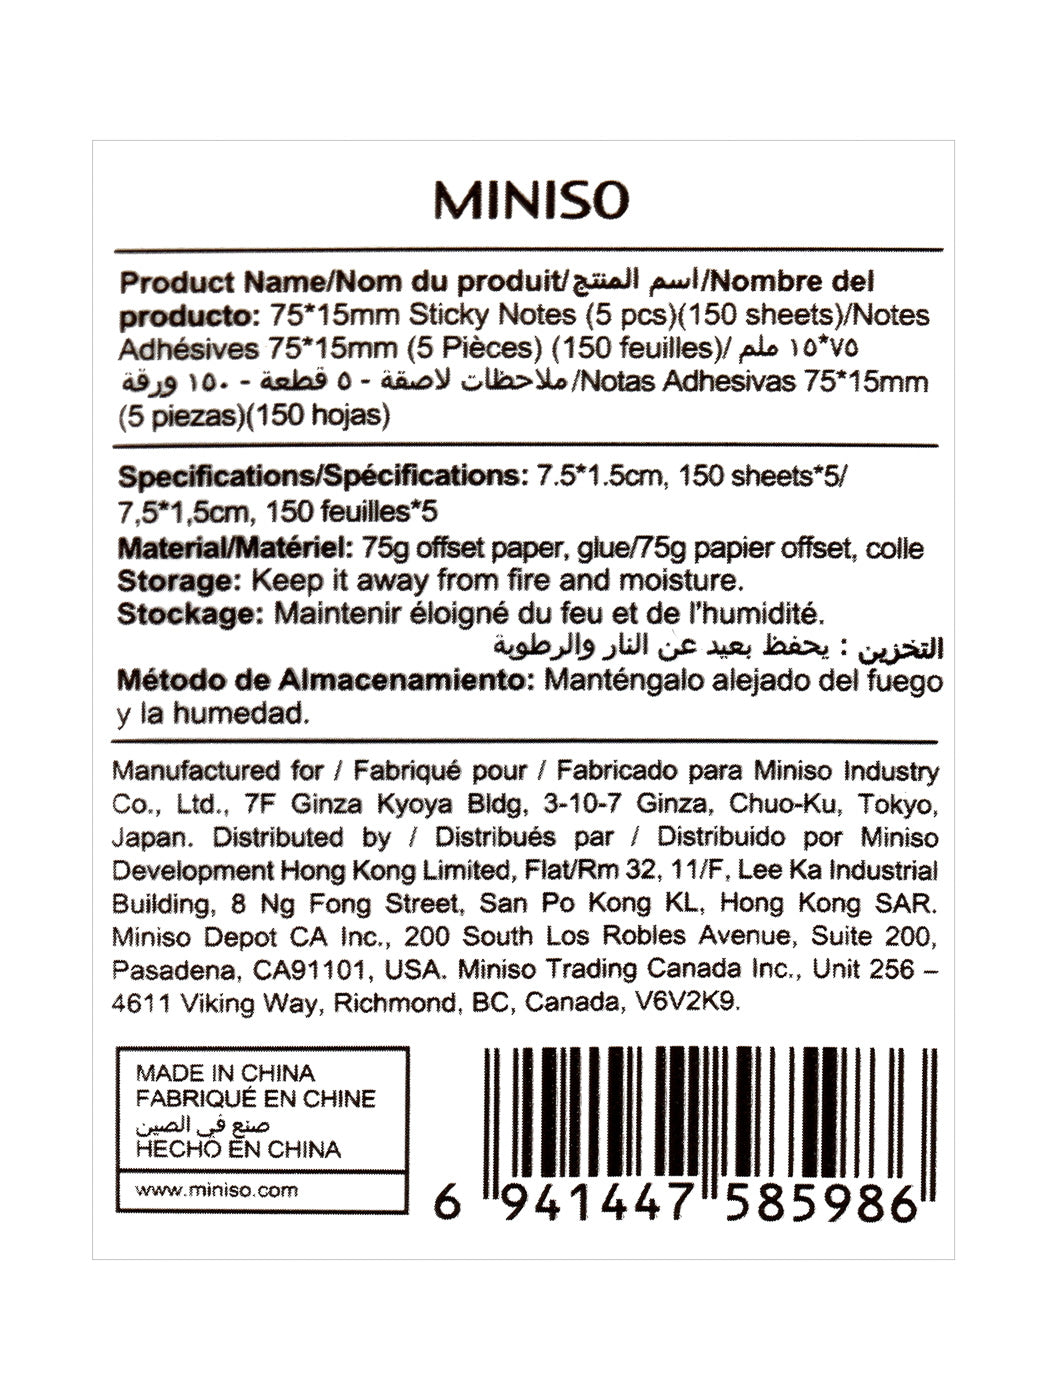 MINISO 75*15MM STICKY NOTES (5 PCS)(150 SHEETS) 2010252911106 STATIONERY